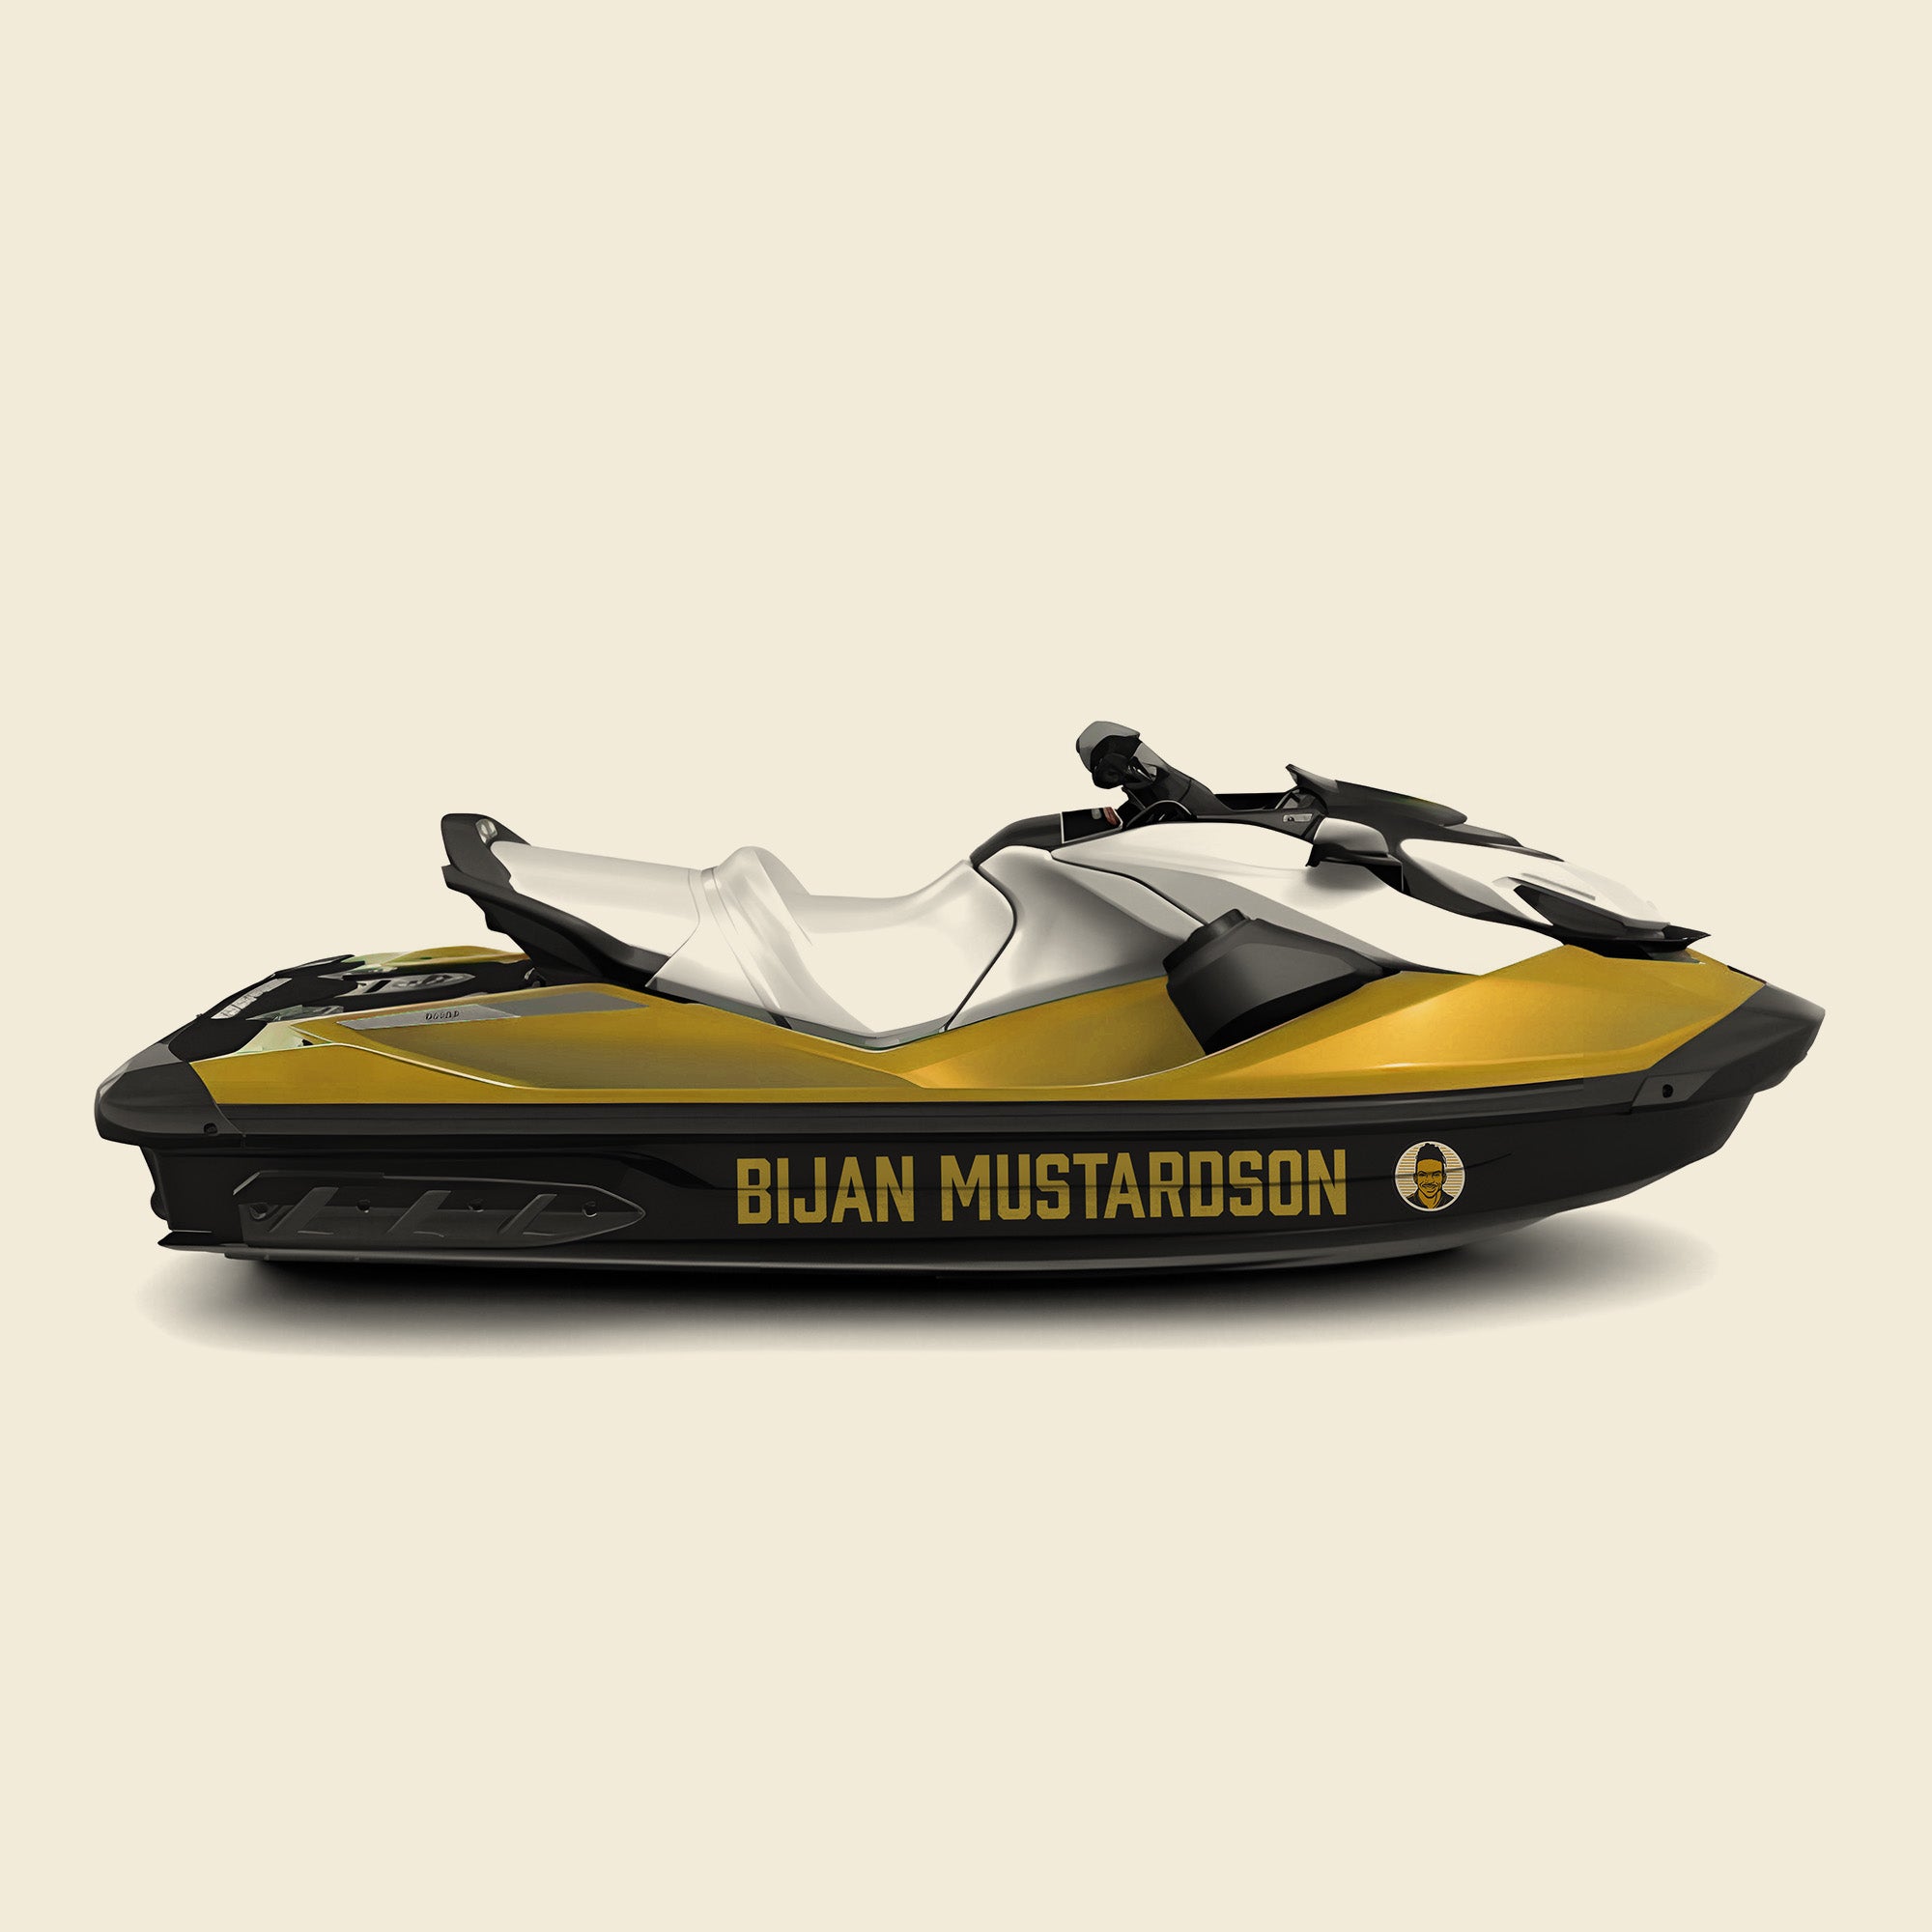 Official Bijan Mustardson Jet Ski